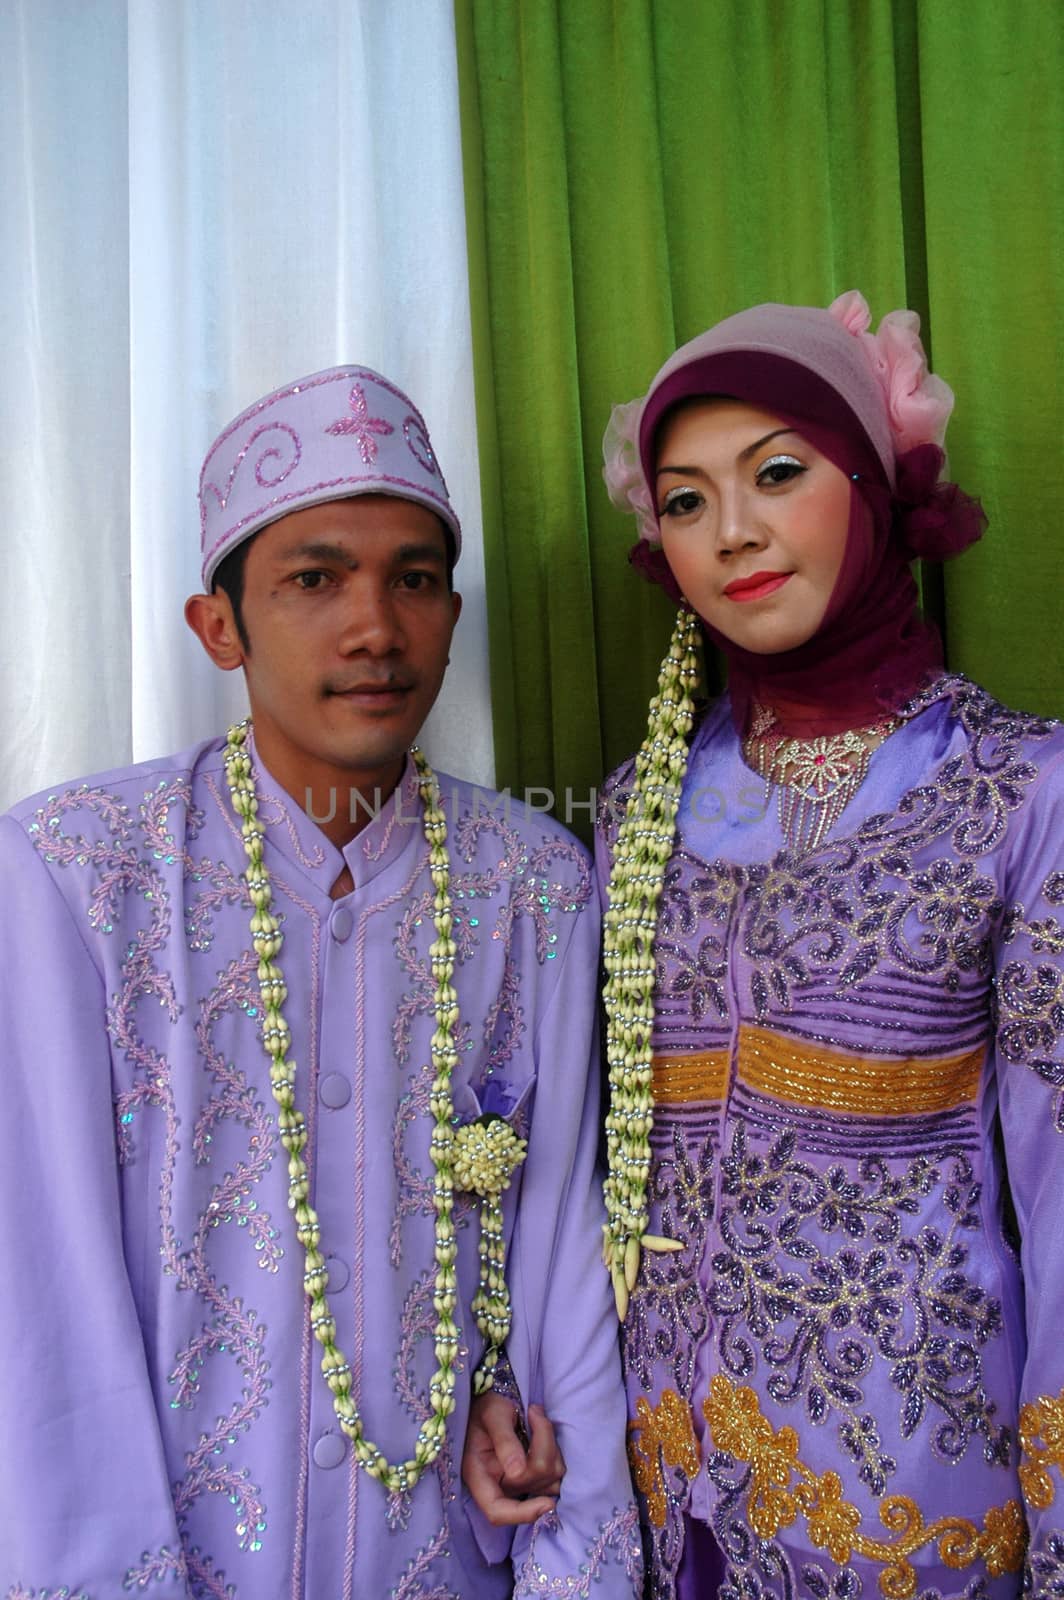 cikijing, west java, indonesia - july 10, 2011: bride and groom wearing traditional west java wedding costume